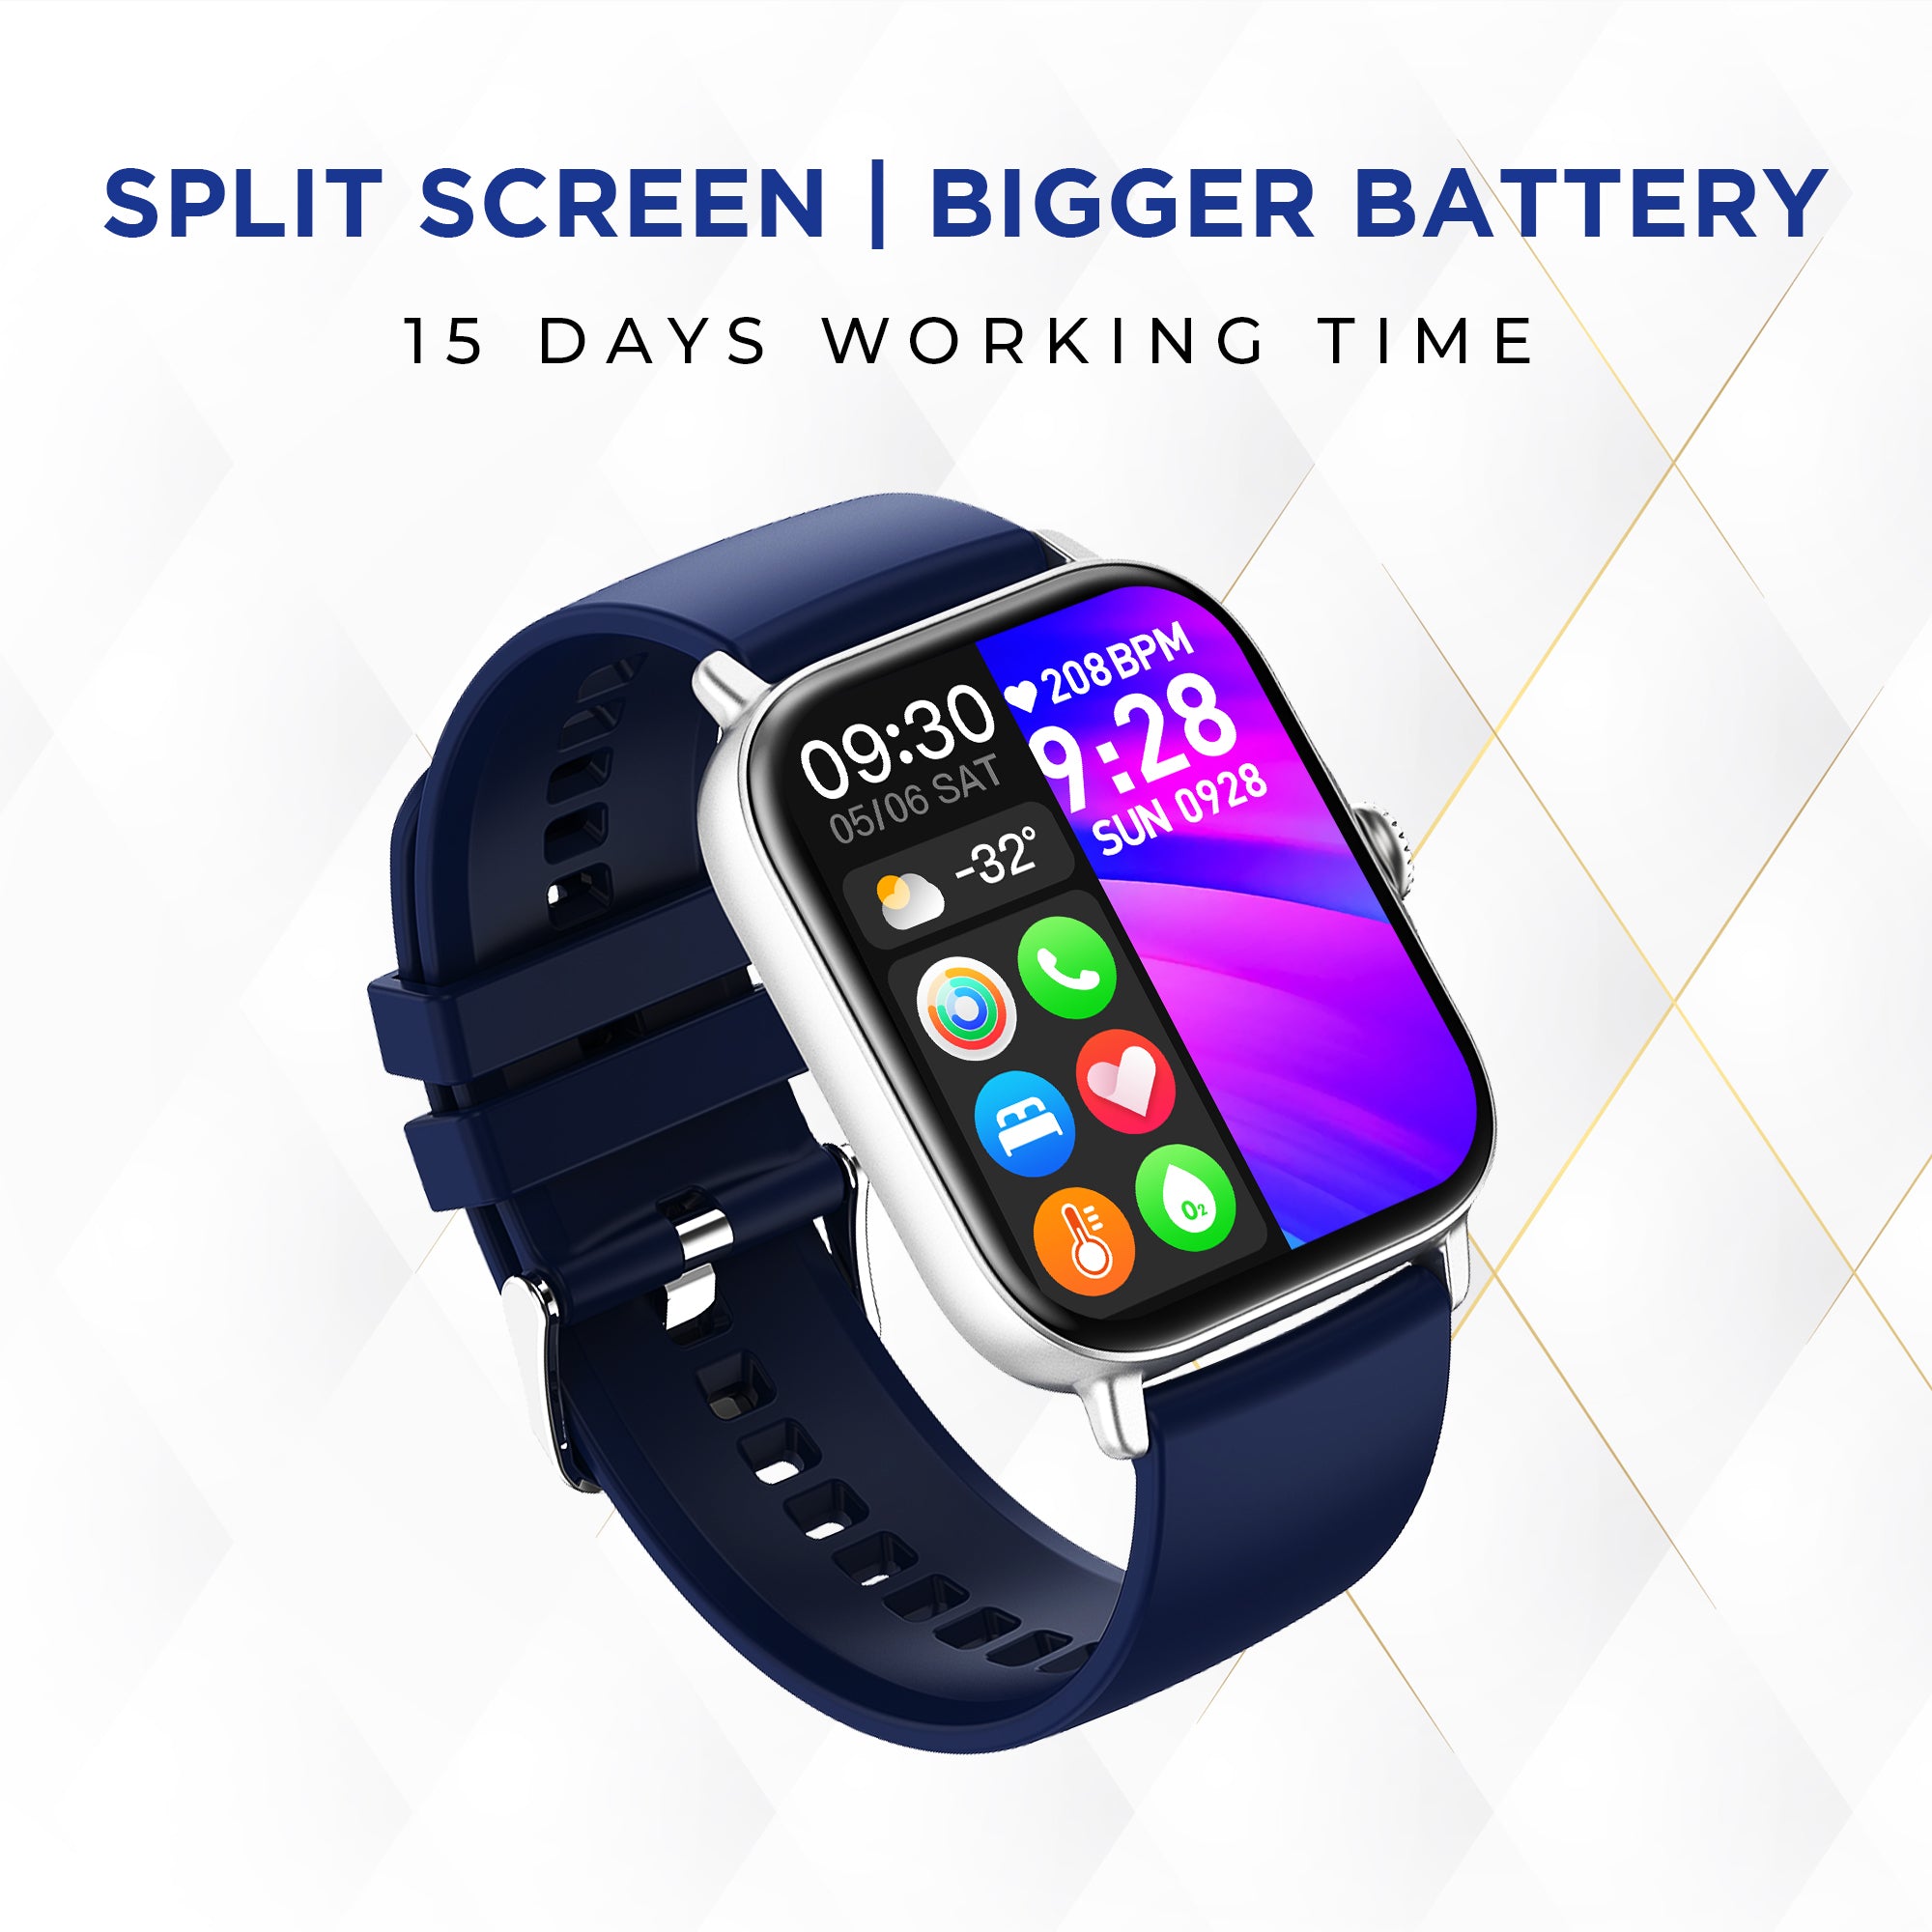 GIZMORE FLASH BT Calling Smartwatch | 1.85 Inch Big Display| 500 NITS | SpO2 Smartwatch Voice Assistance, Bluetooth Smartwatch